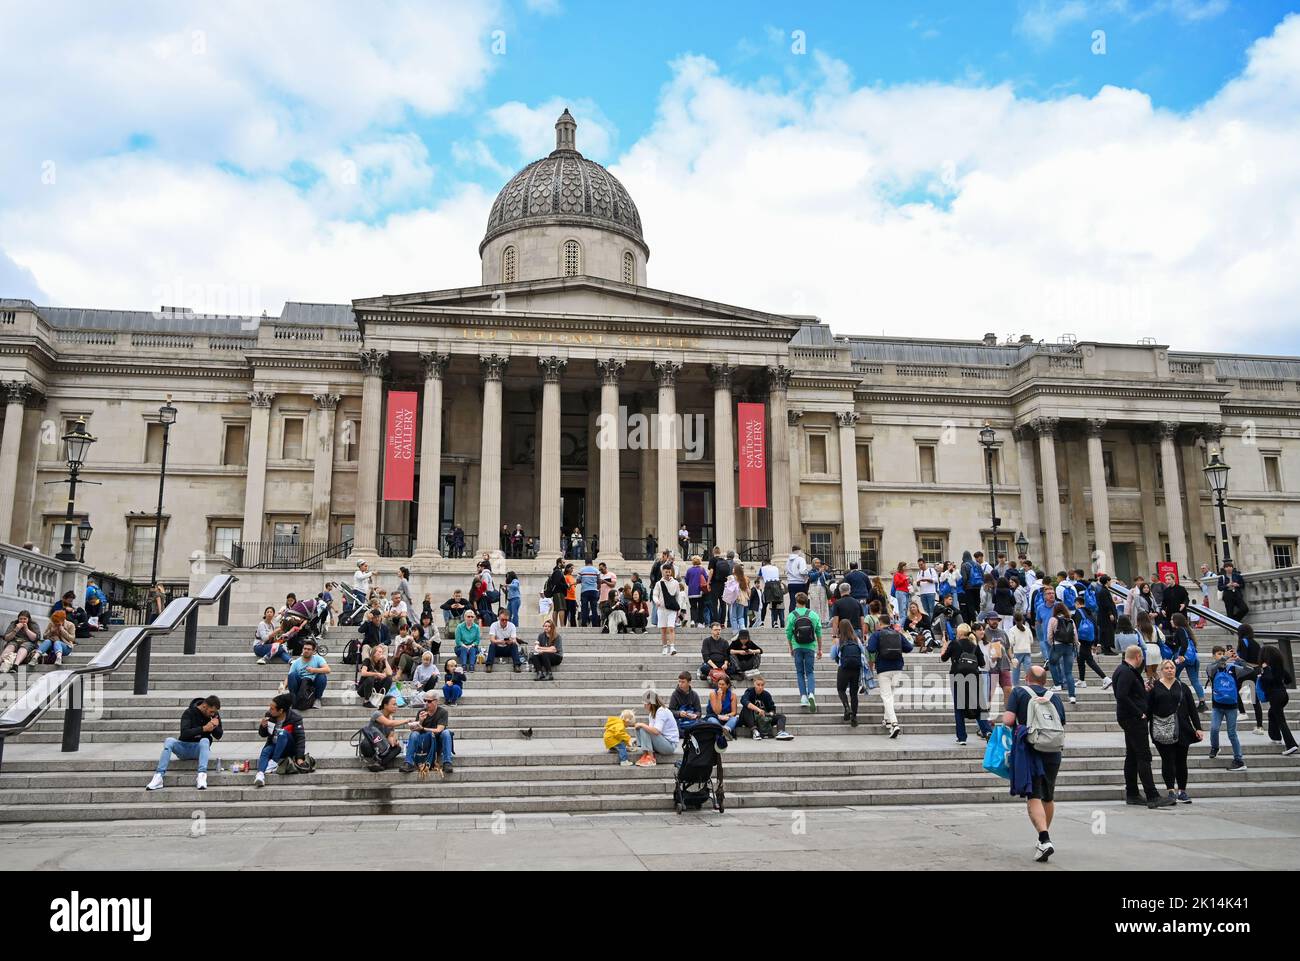 Trafalgar Square London UK - The National Portrait Gallery in Trafalgar Square London UK Stock Photo